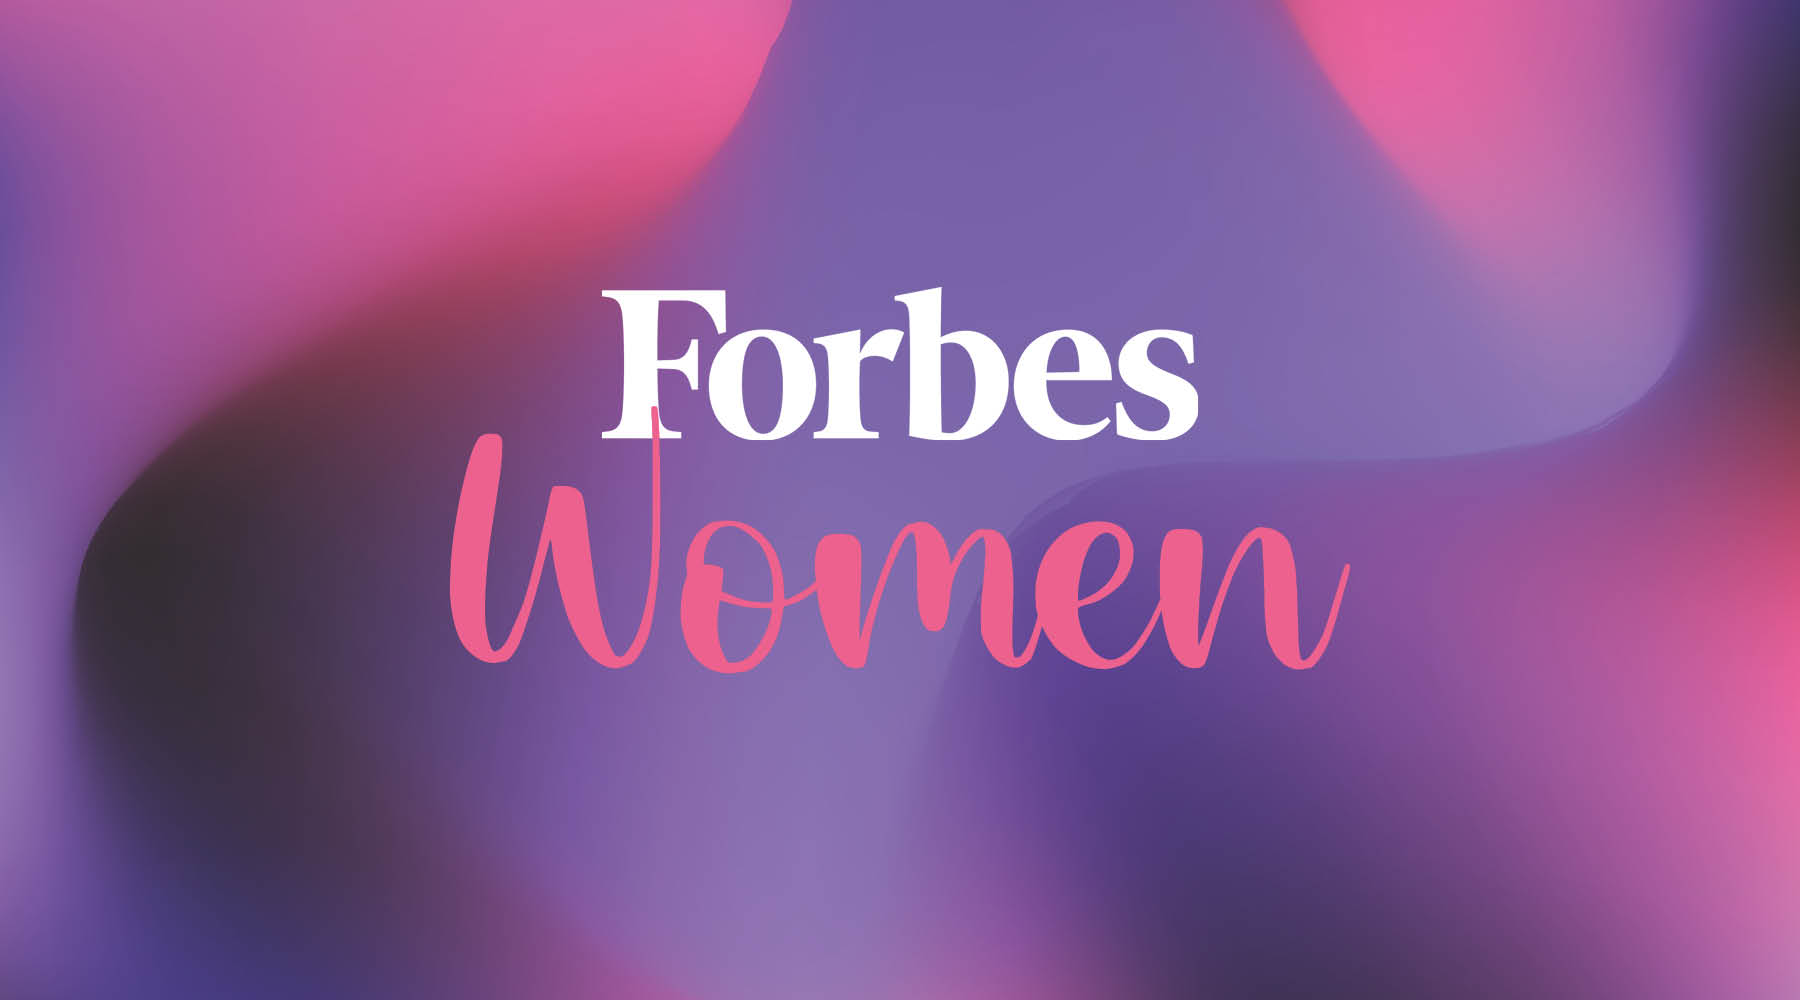 Forbes Women video